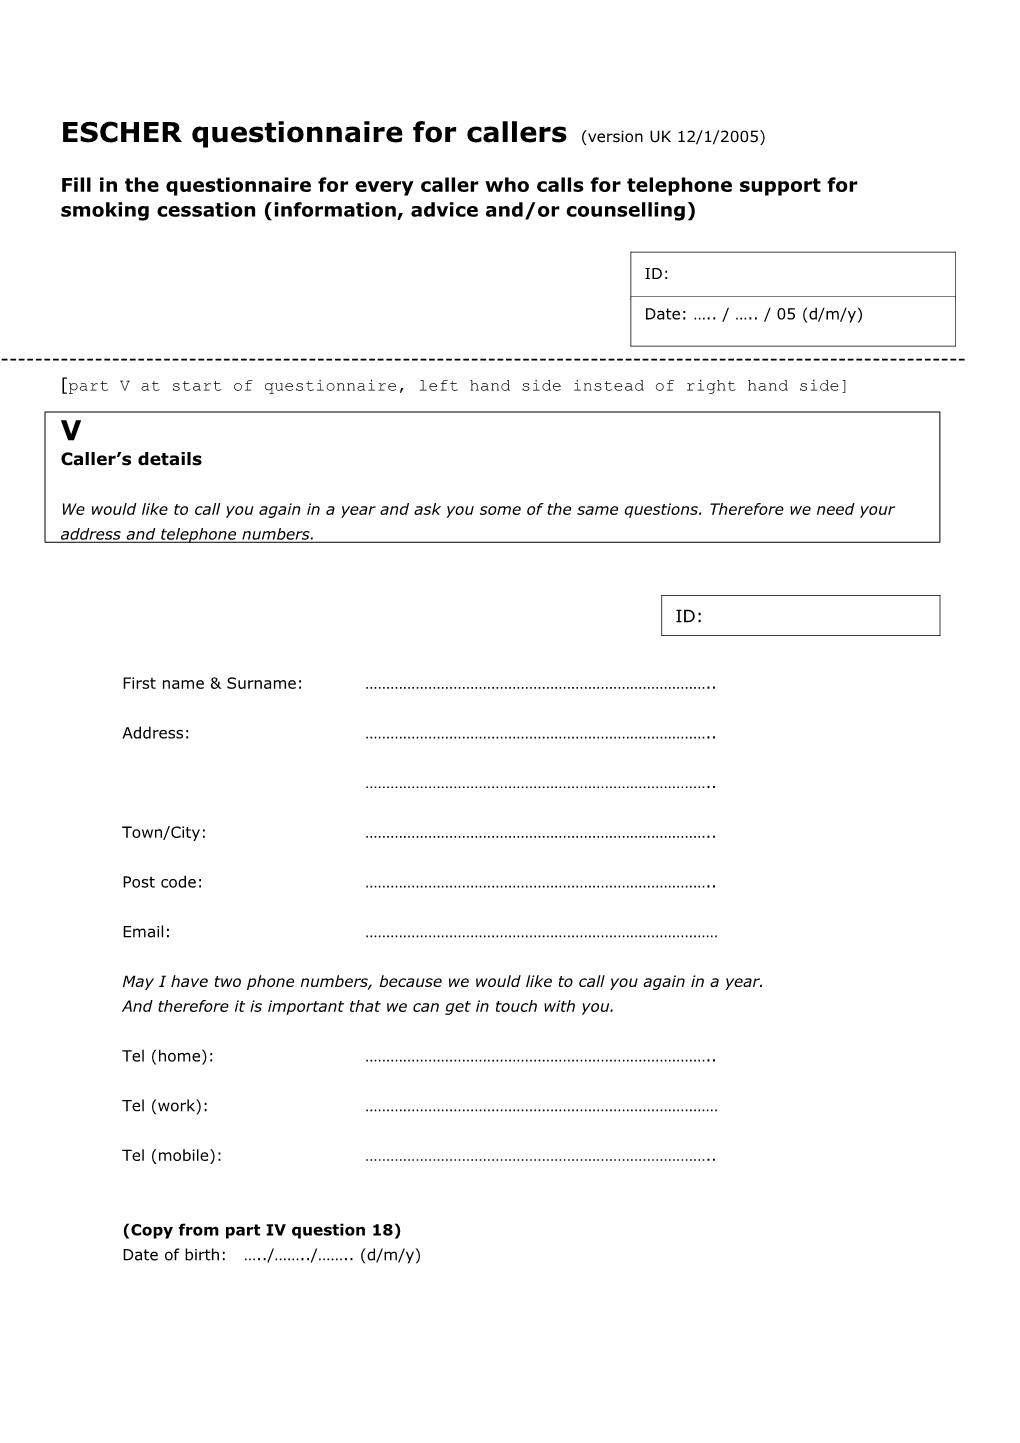 ESCHER Questionnaire for Callers (Version UK 12/1/2005)